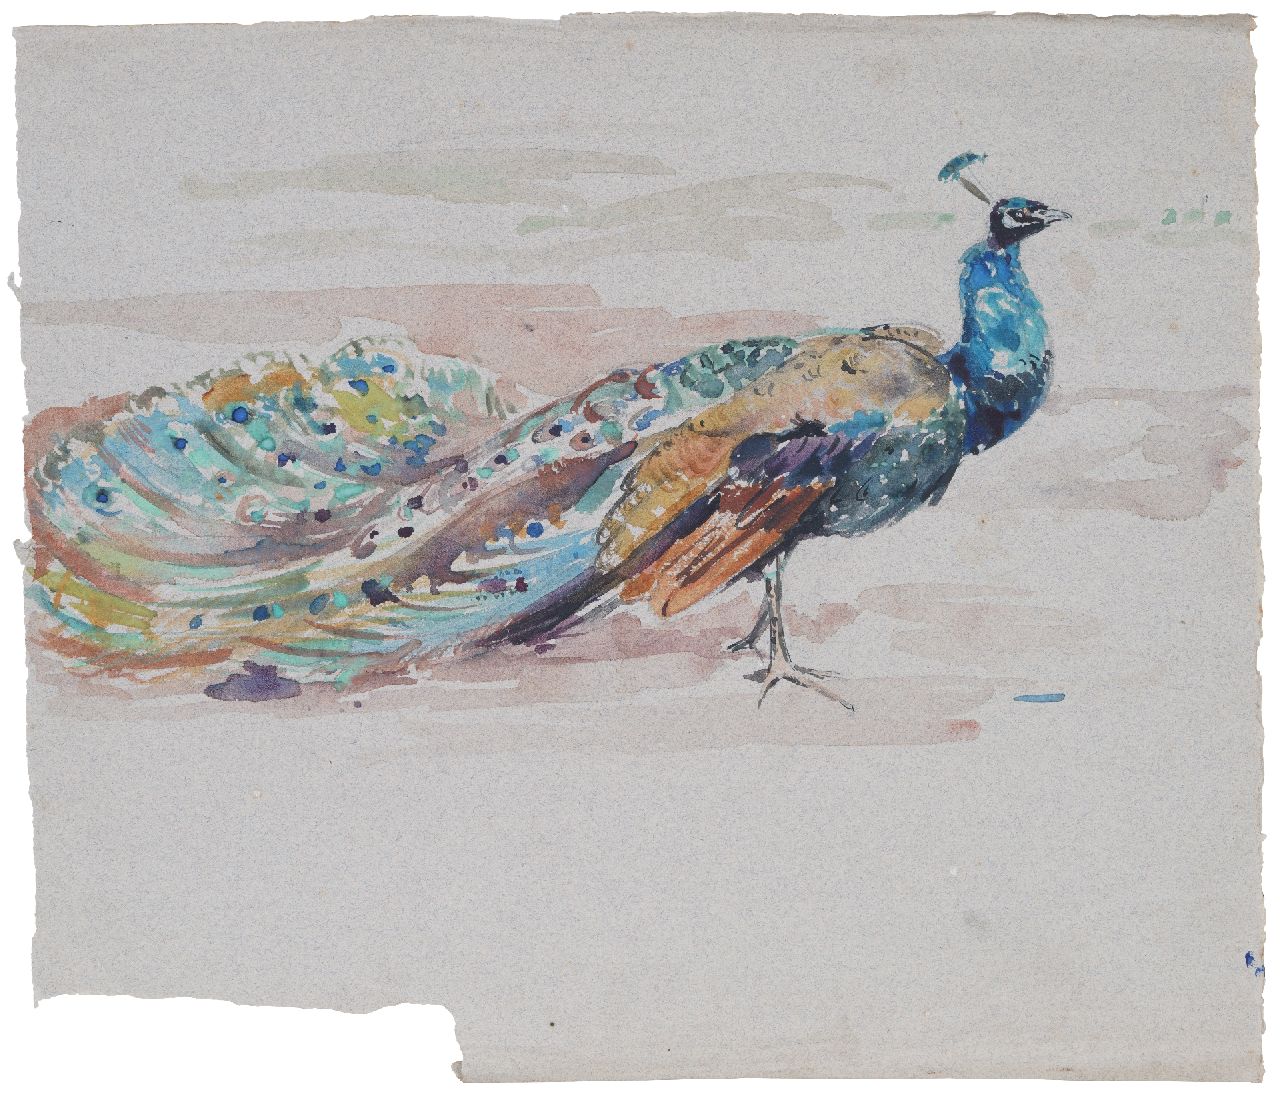 Bruigom M.C.  | Margaretha Cornelia 'Greta' Bruigom | Watercolours and drawings offered for sale | Peacock, watercolour on paper 32.6 x 37.6 cm